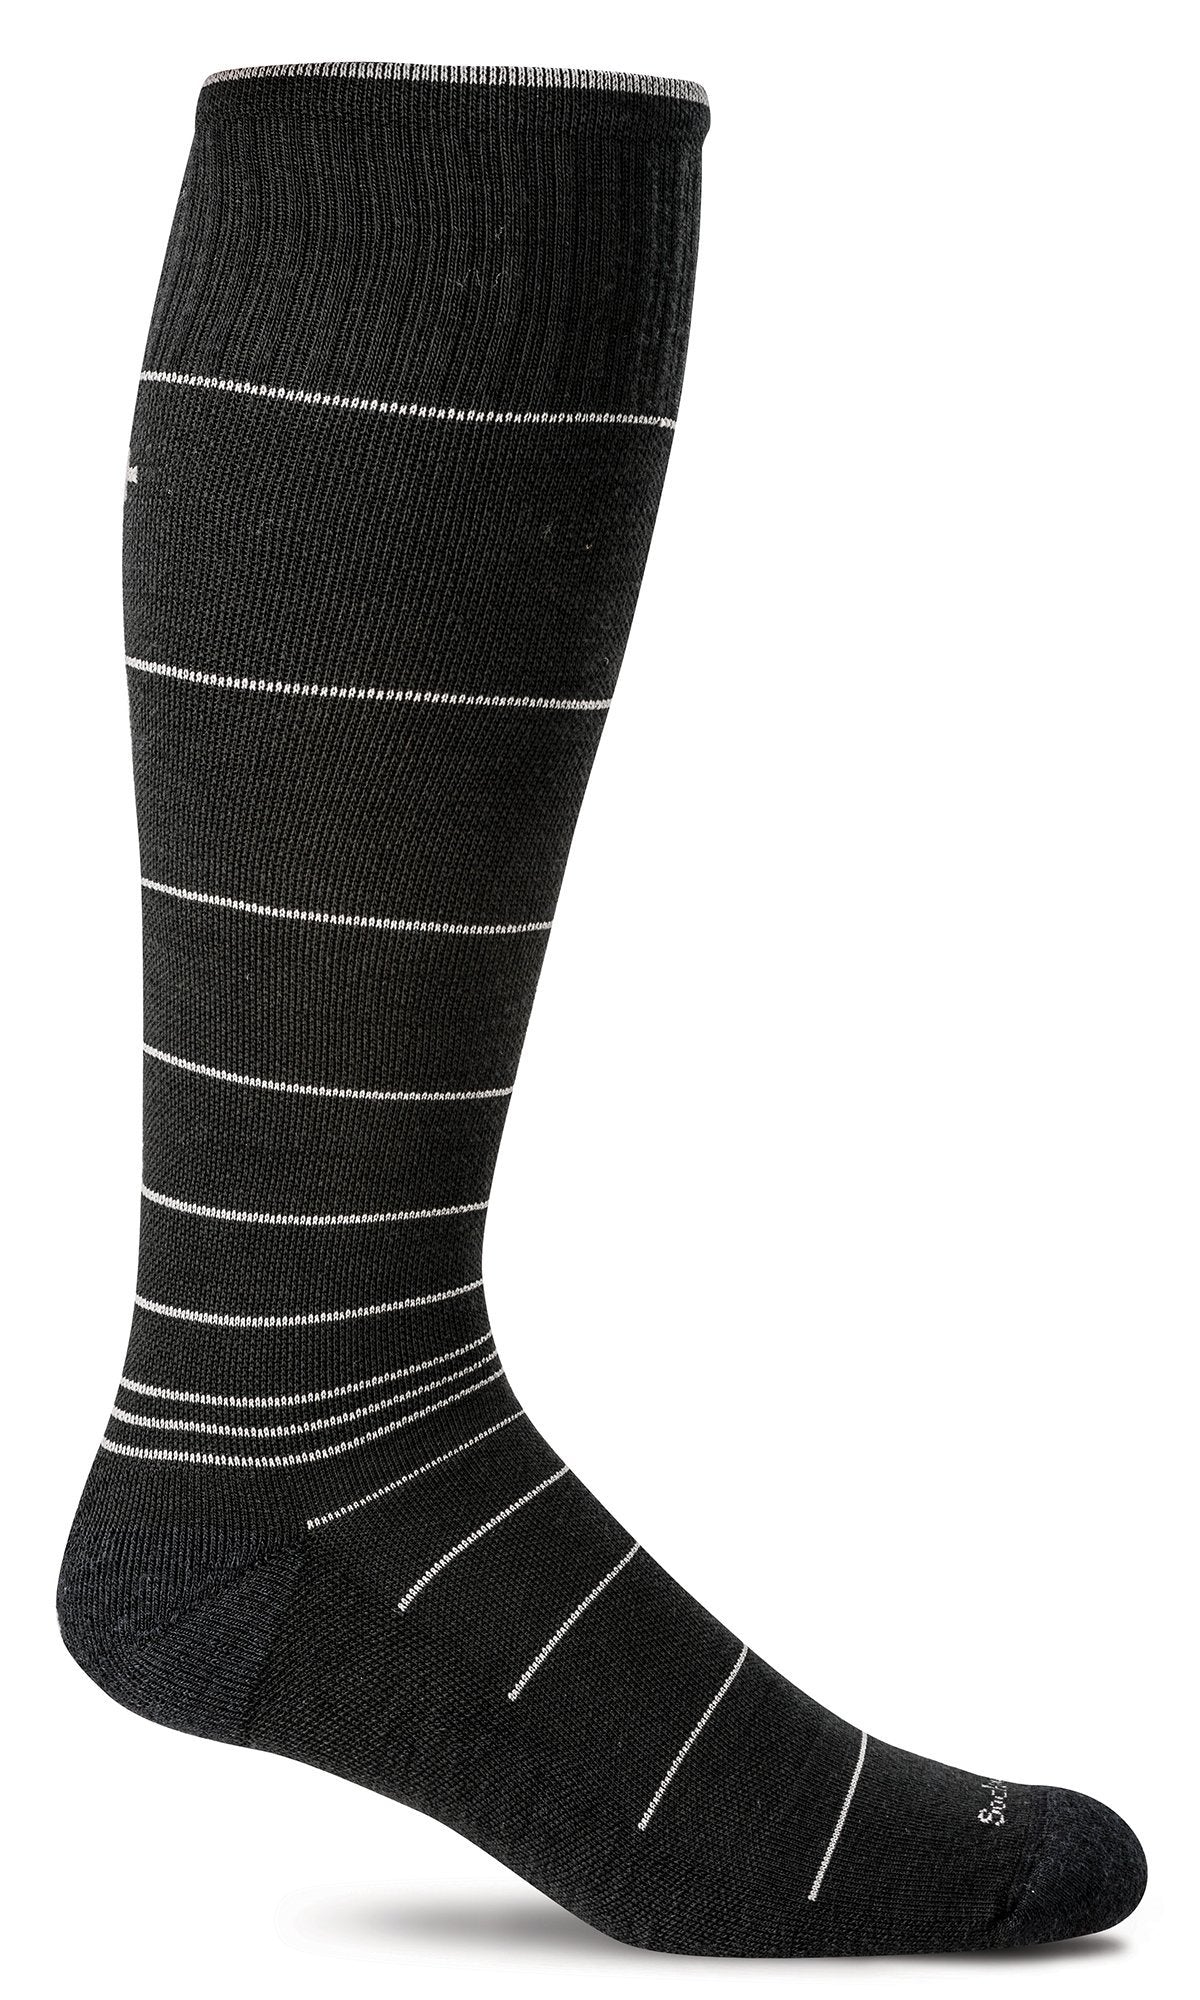 Sockwell Best-selling Men's Circulator Merino Wool Compression Socks in Denim